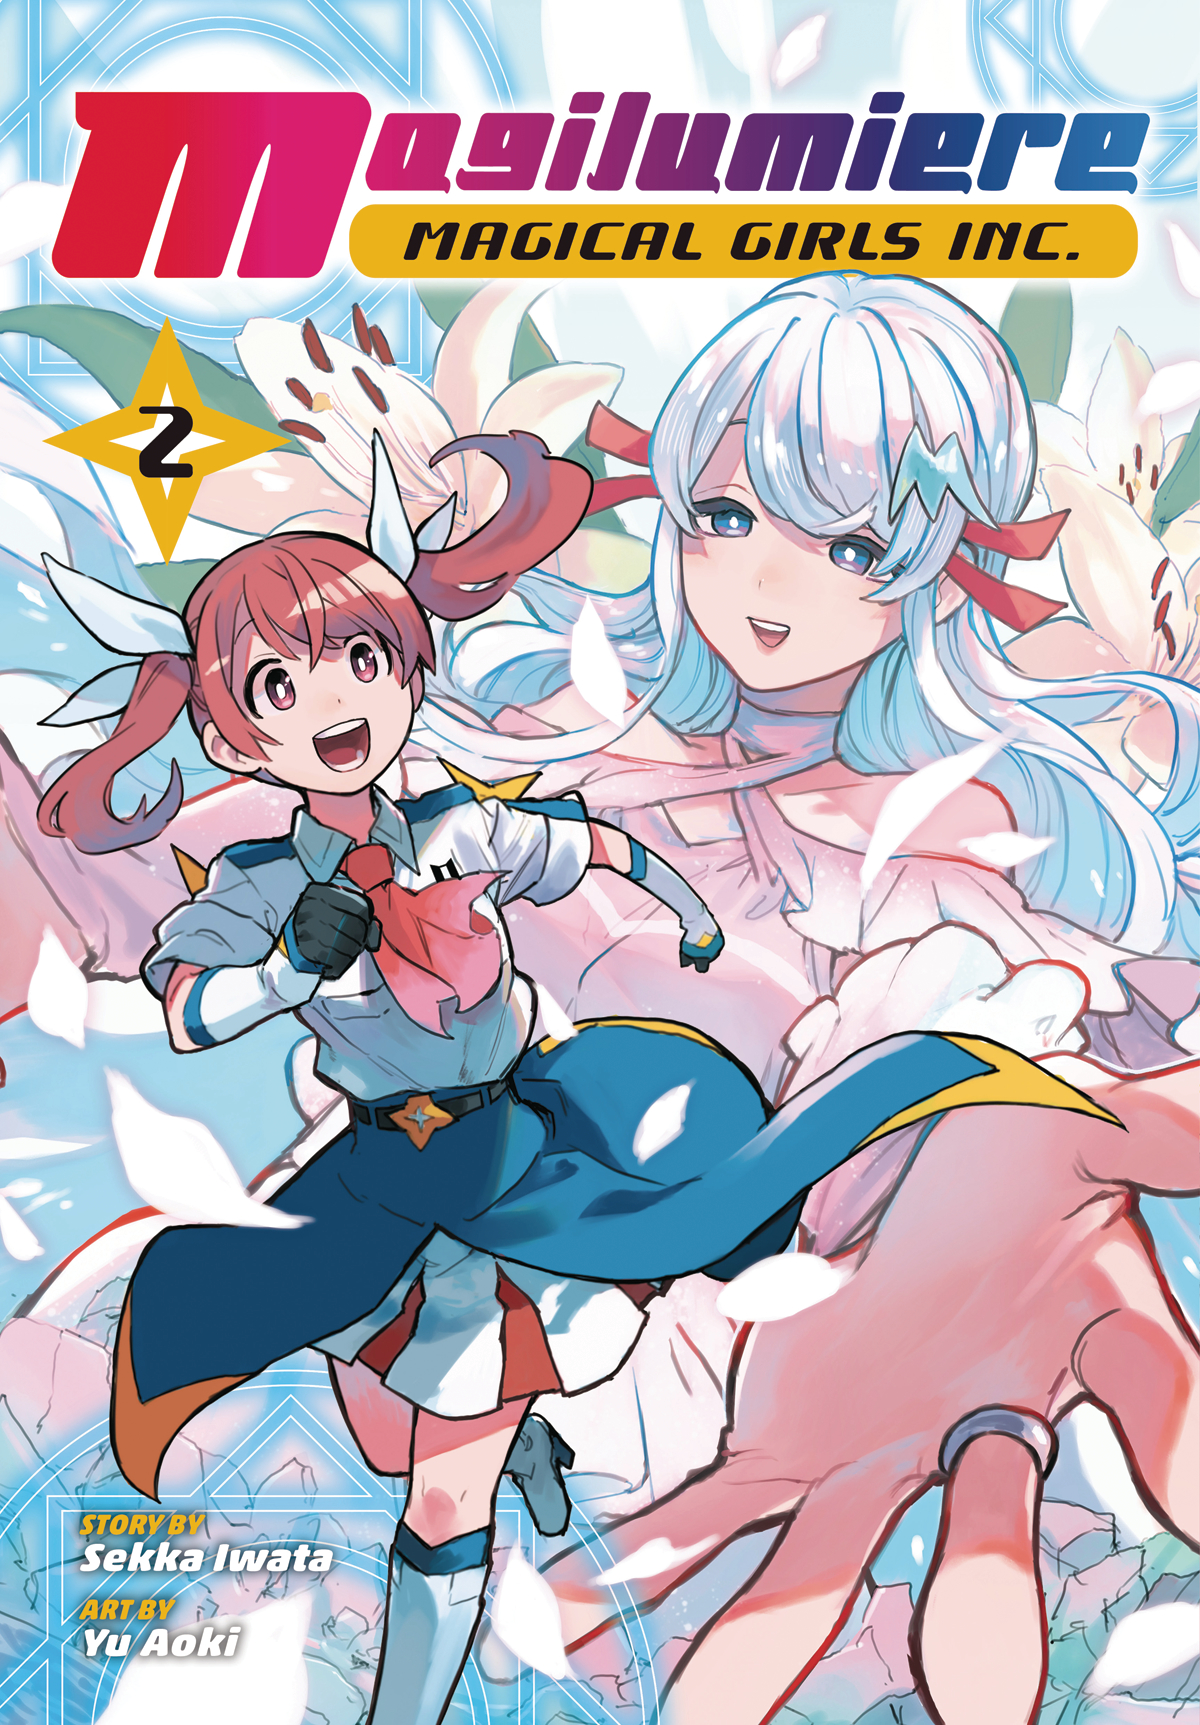 Magilumiere Magical Girls Inc Manga Volume 2